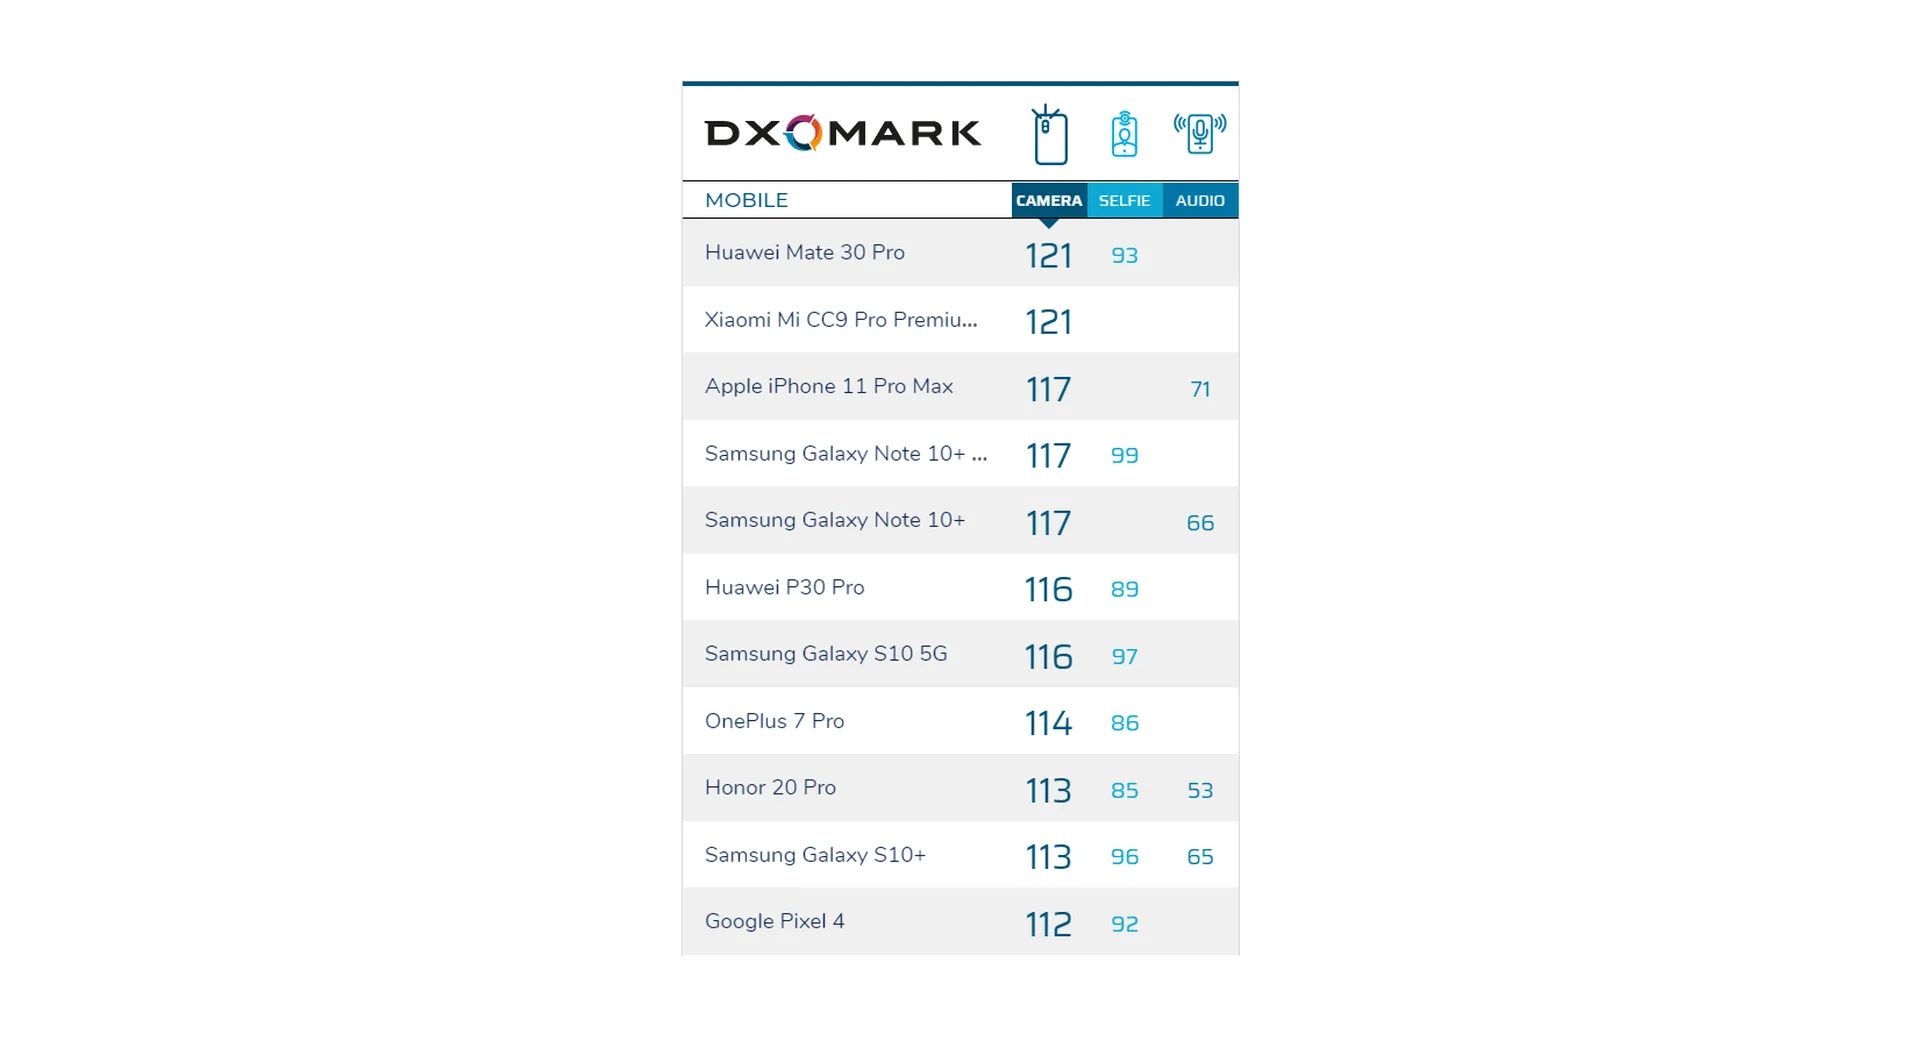 DxOMark Top Rankings